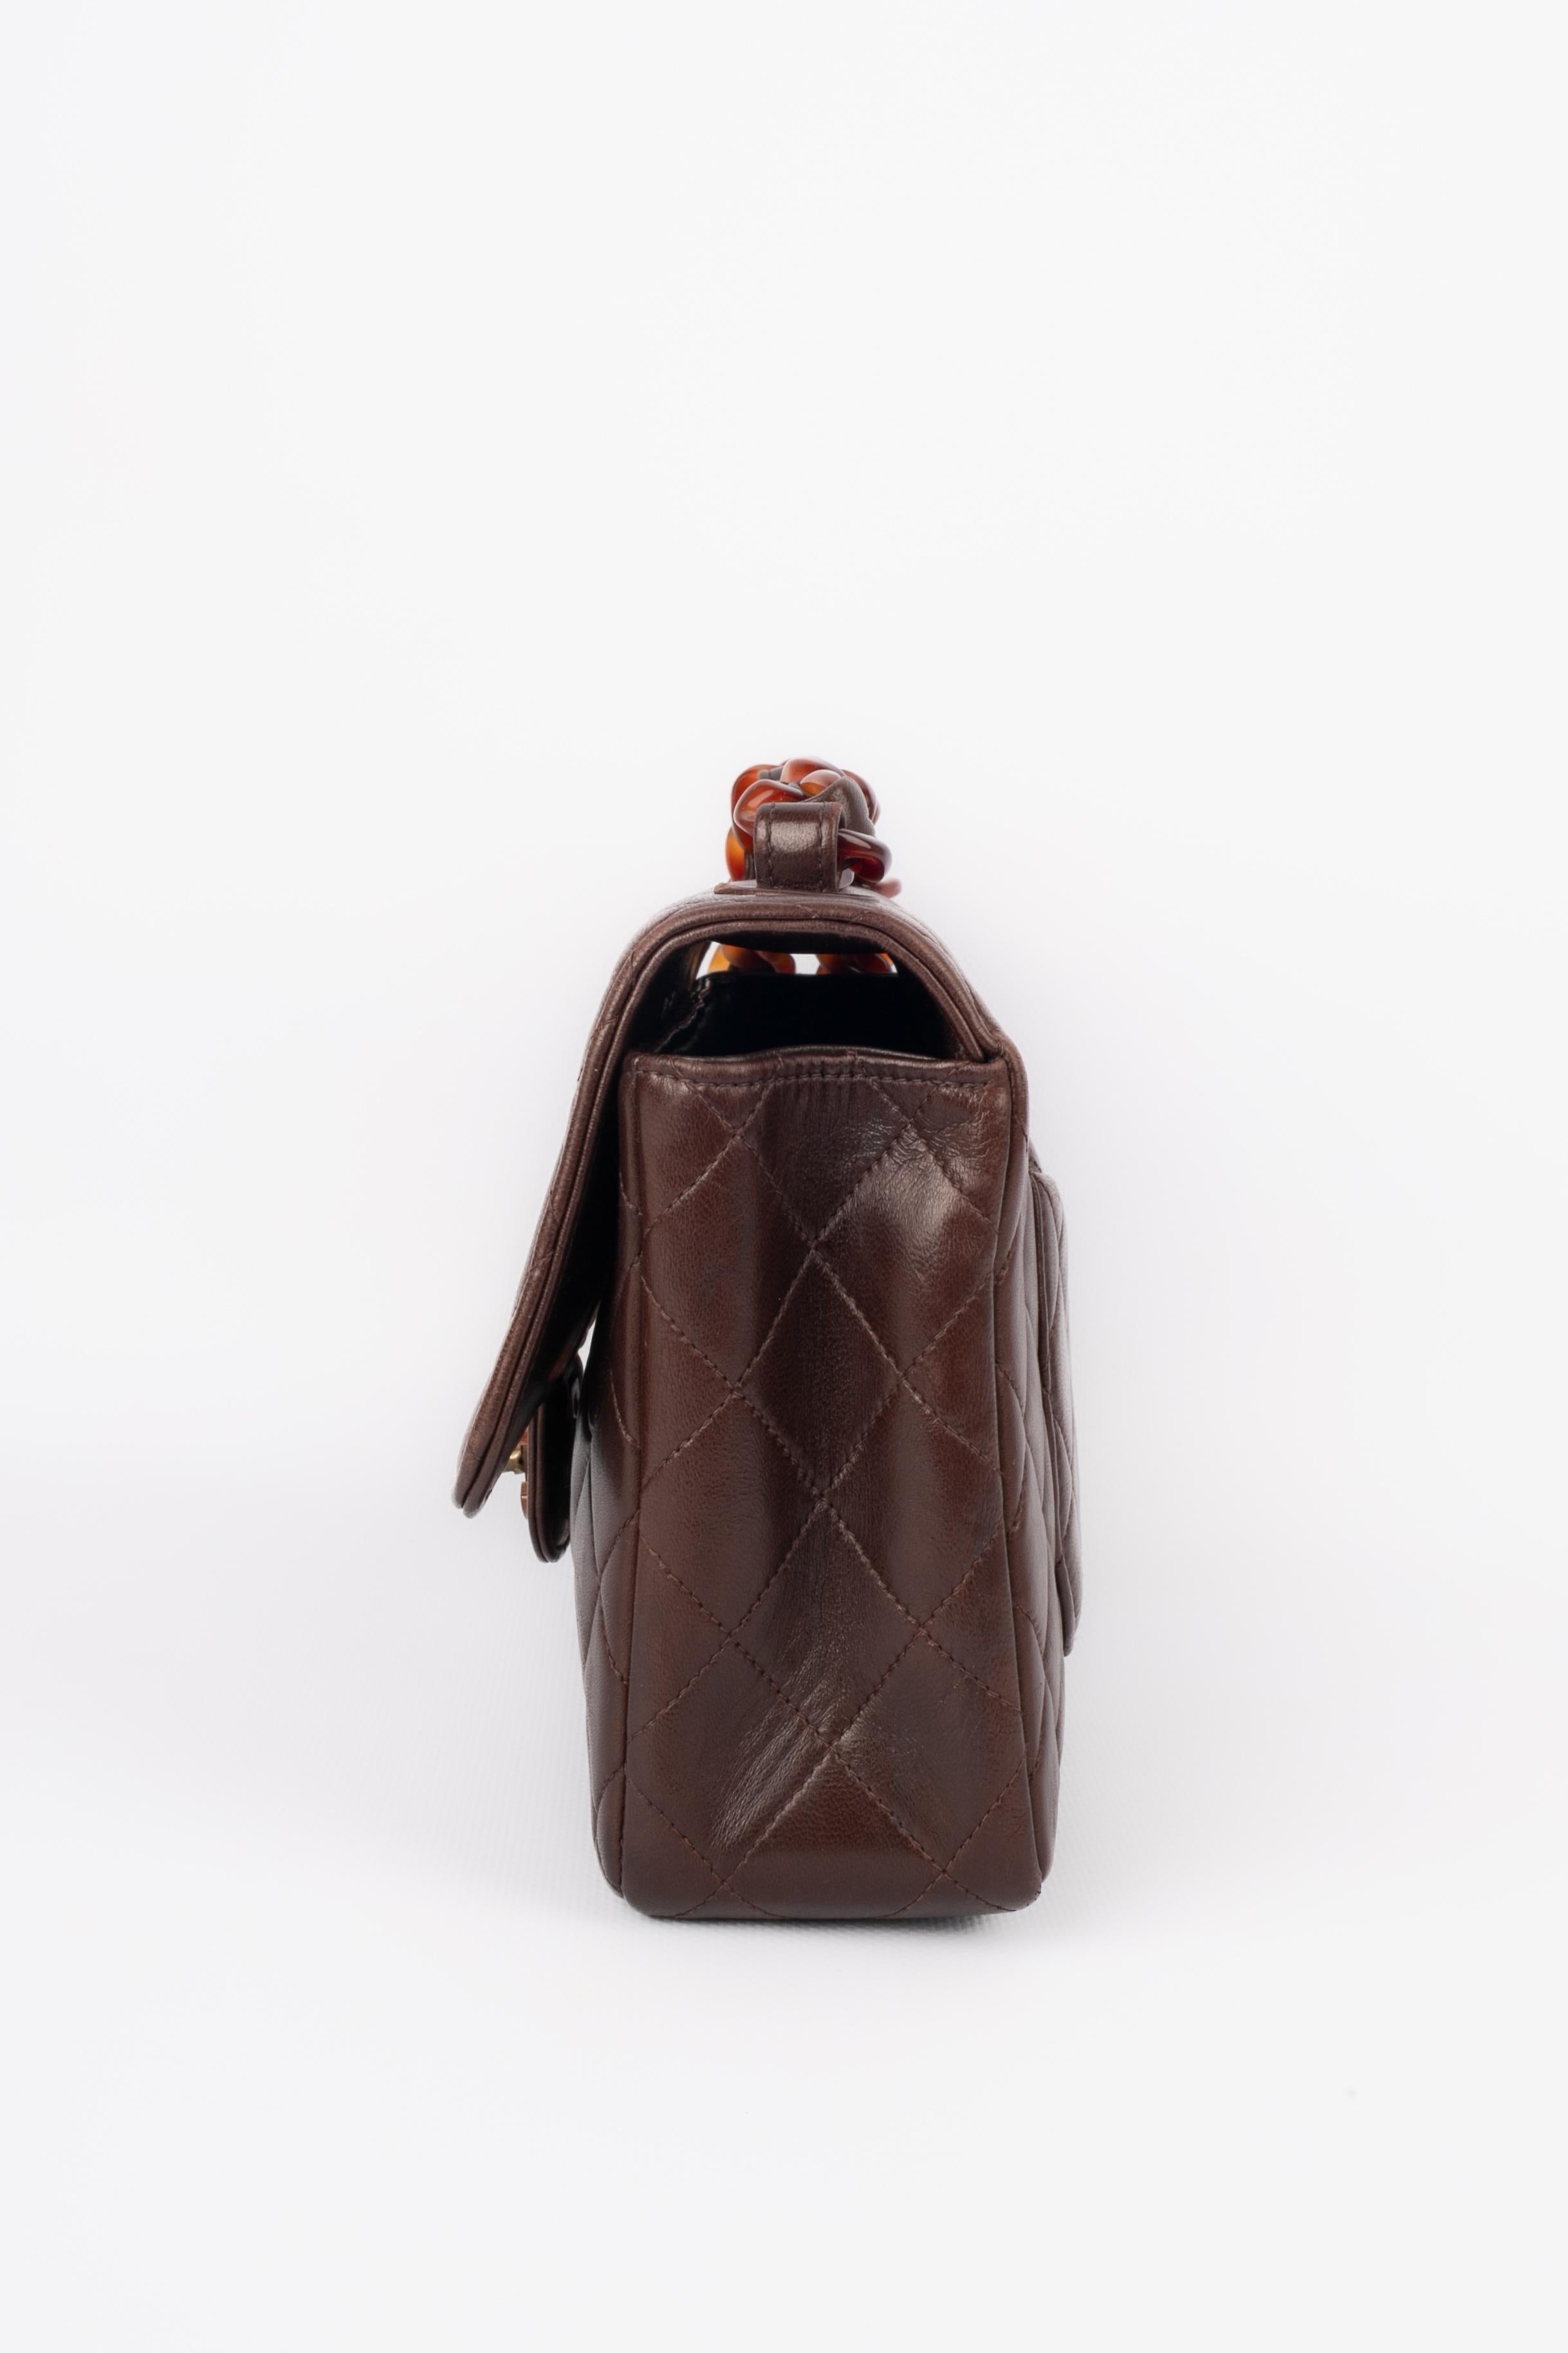 Chanel leather and bakelite bag 2